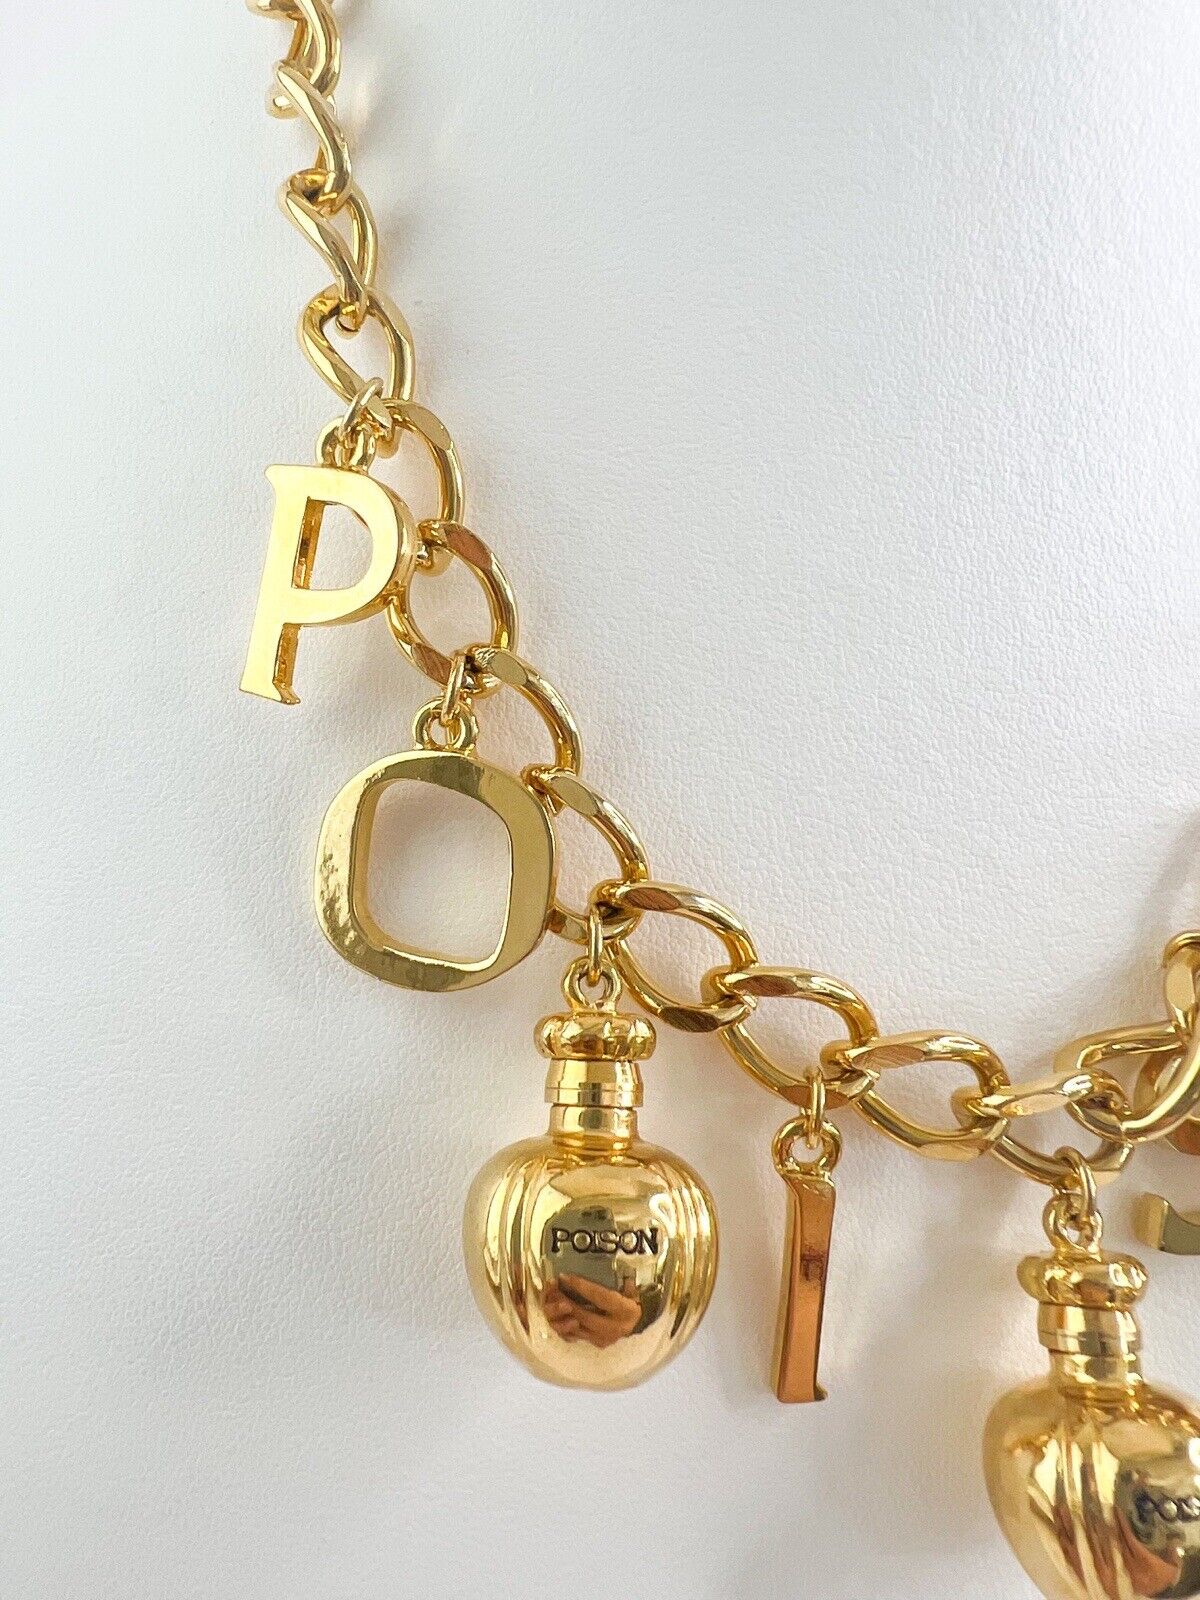 Christian Dior Vintage Chain Necklace POISON Charm Necklace